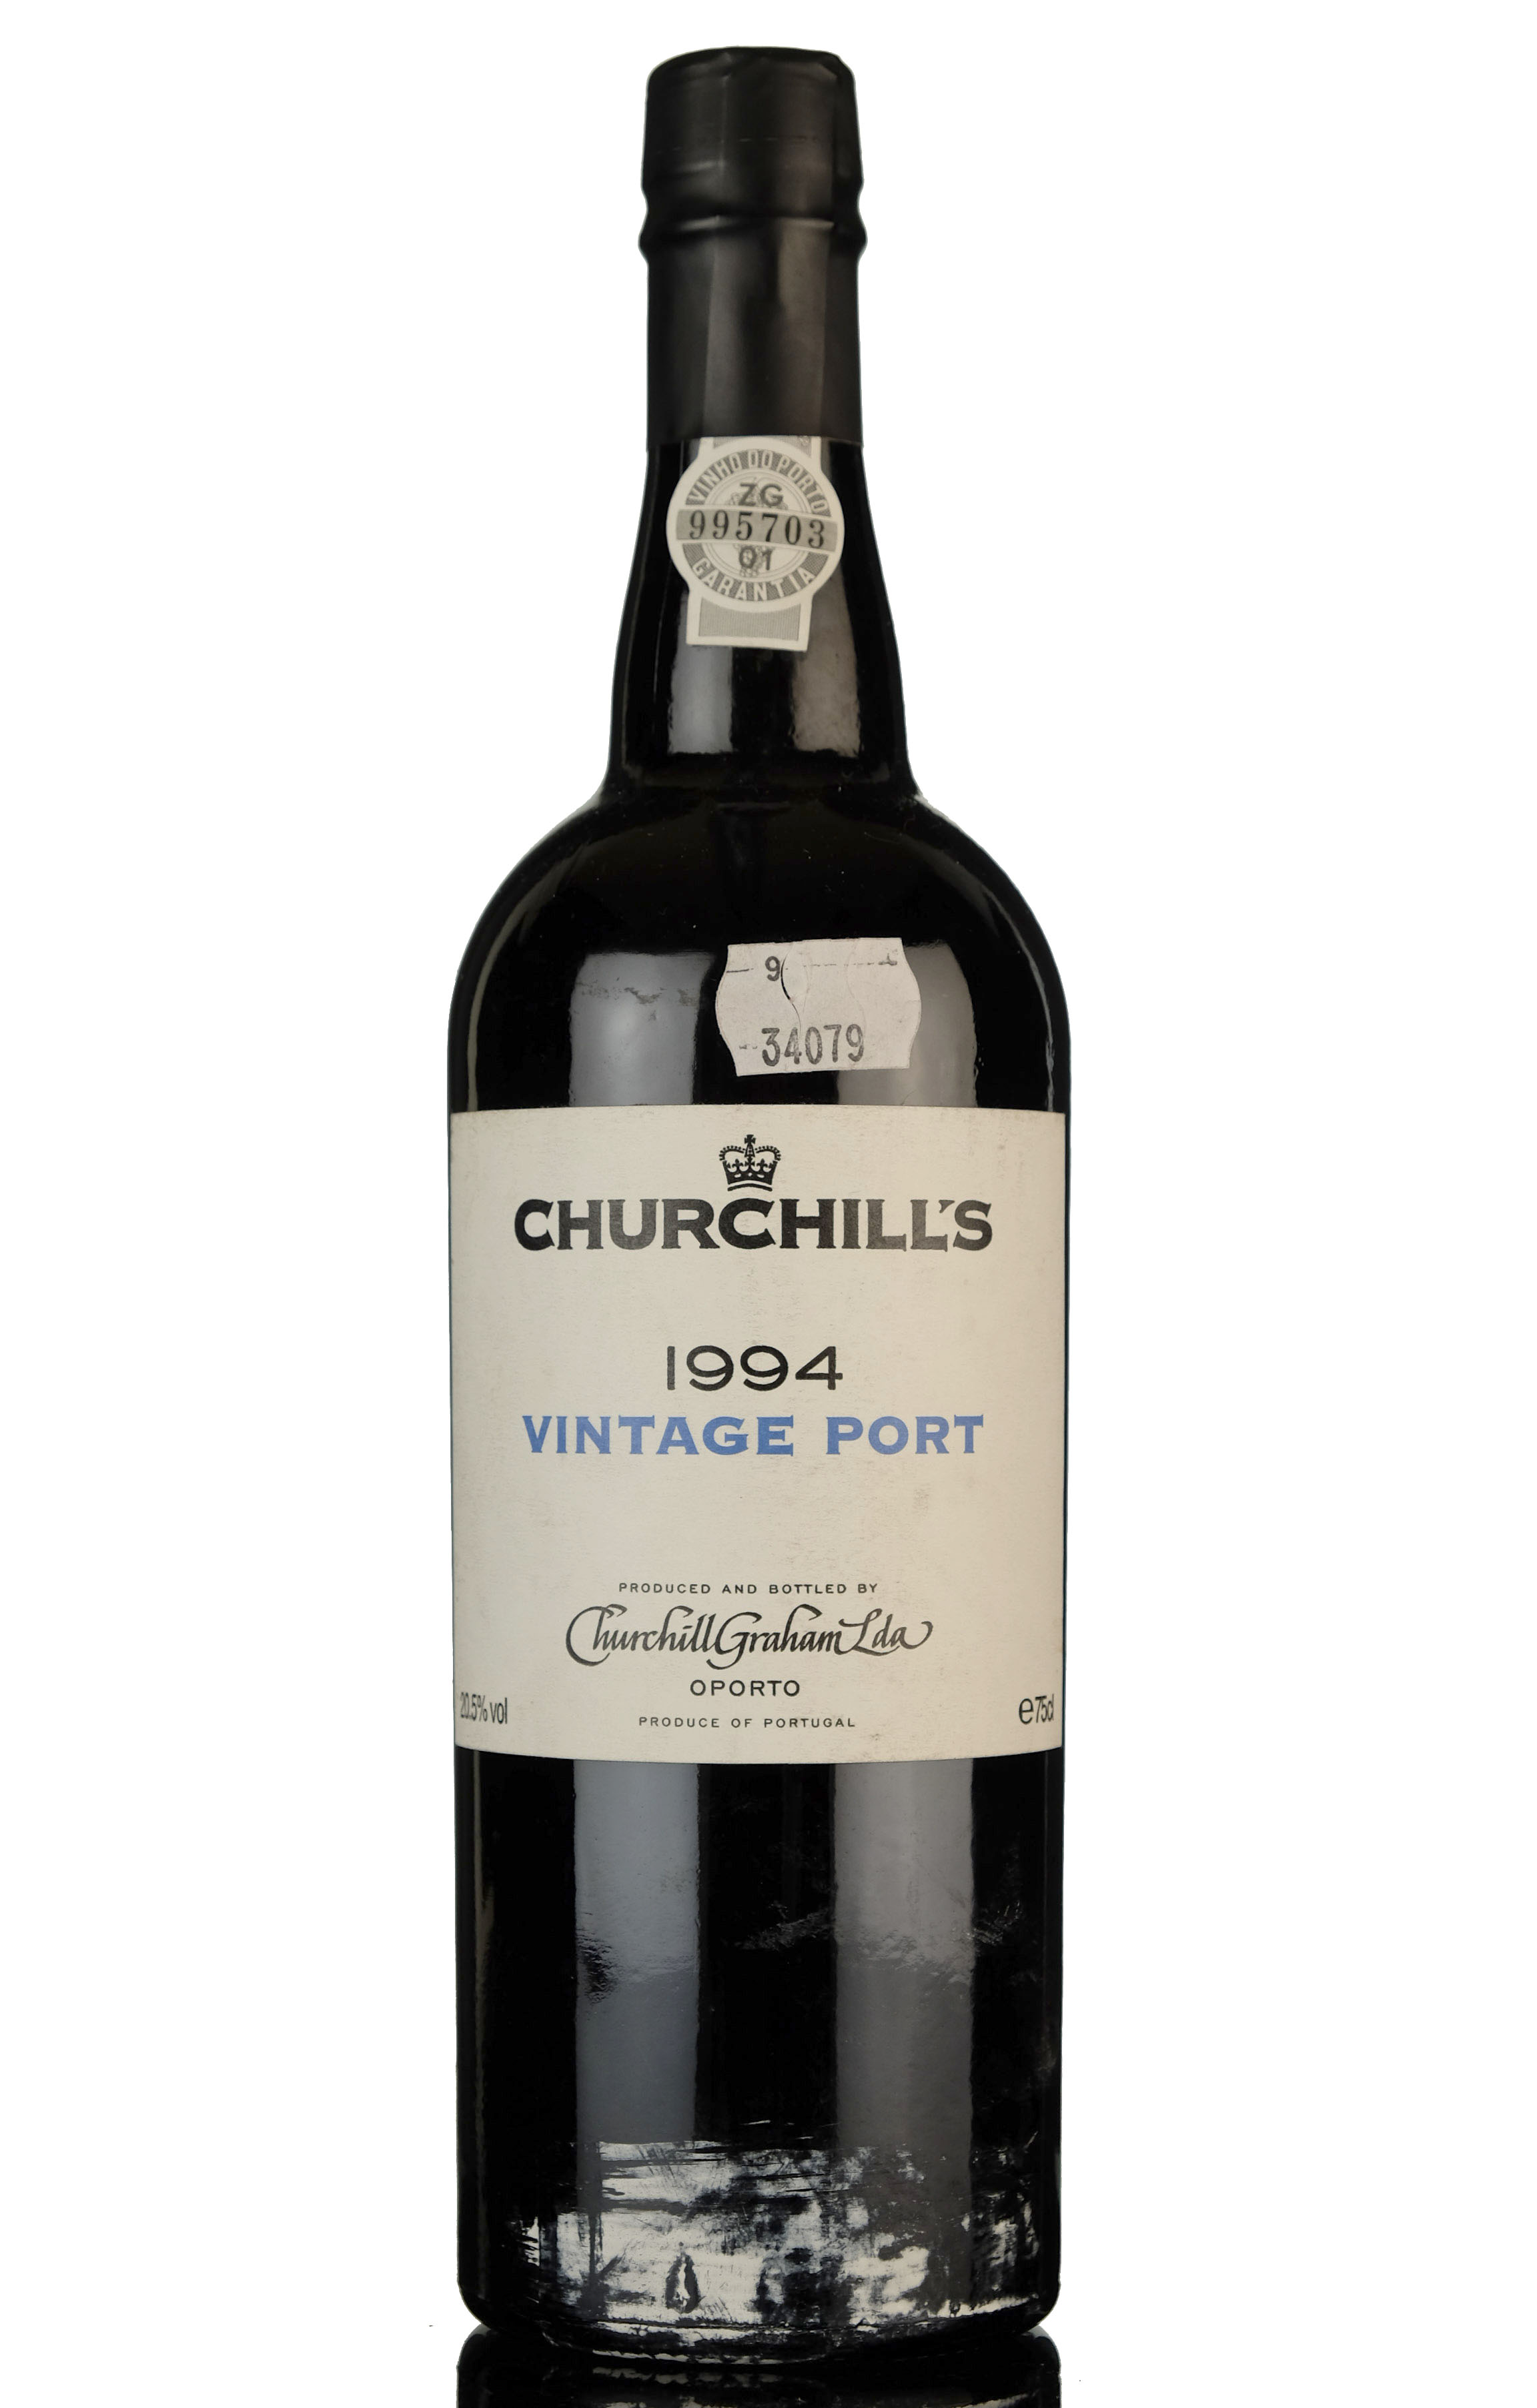 Churchills 1994 Vintage Port